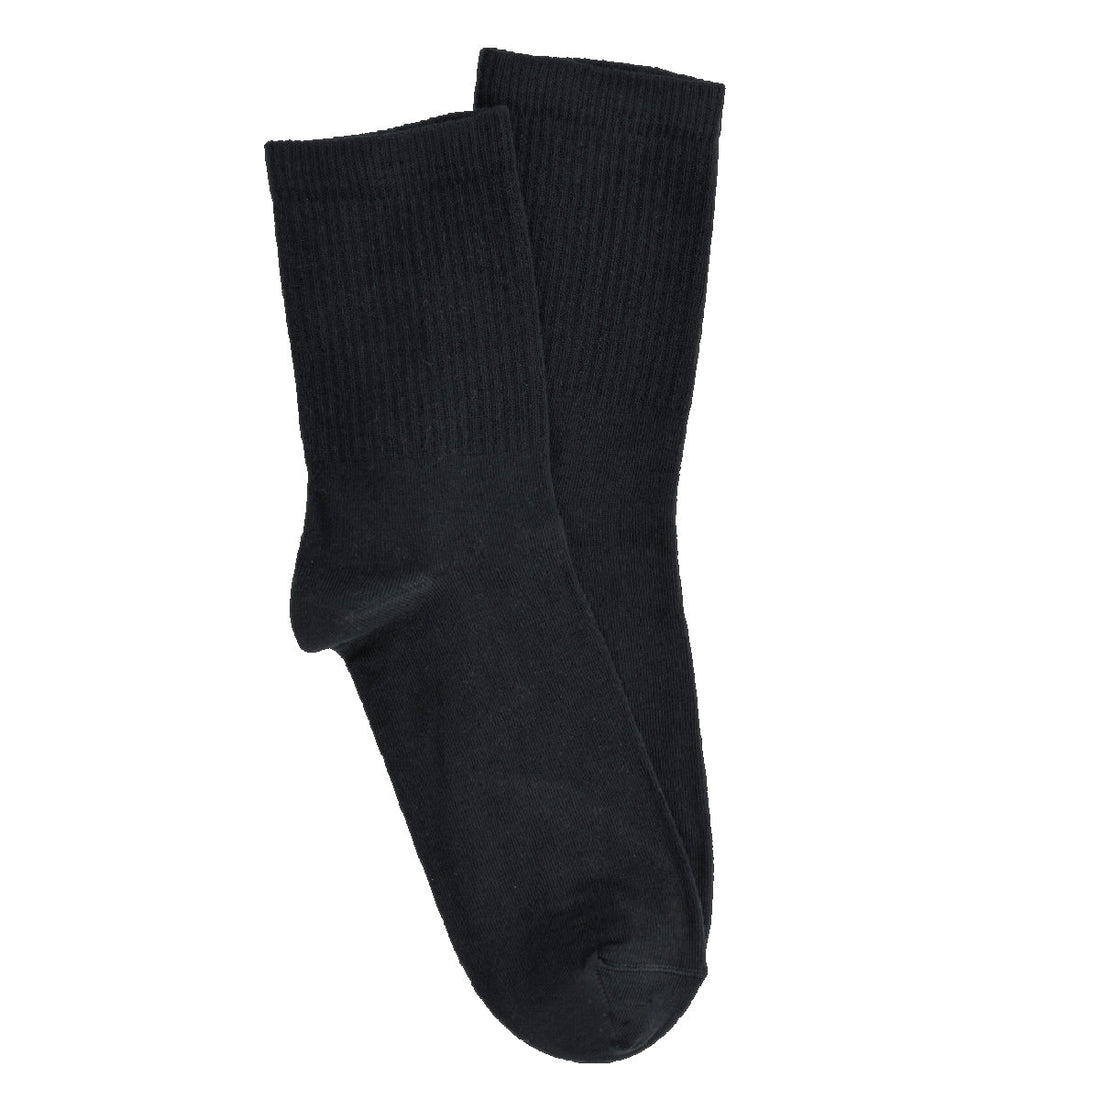 Plain Black Sport Socks